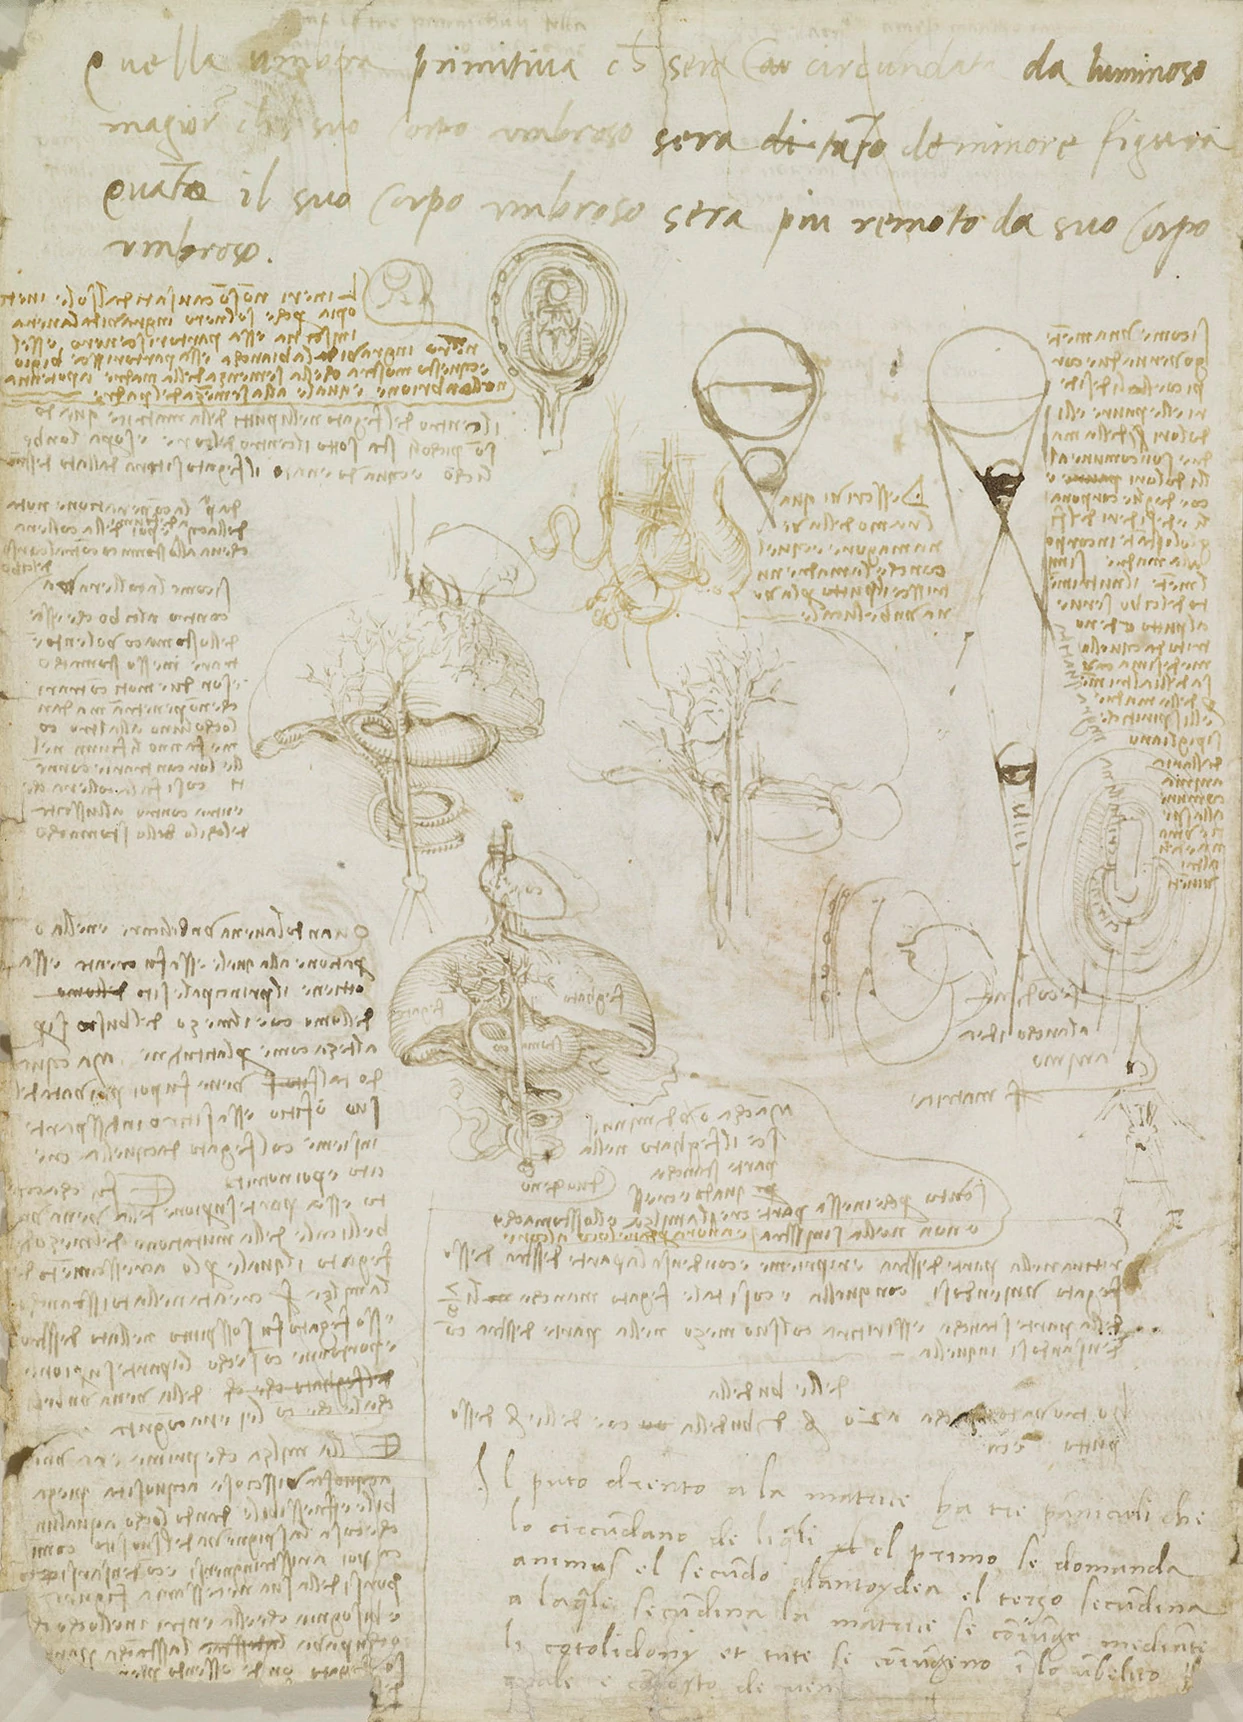 Notes on reproduction, Leonardo da Vinci